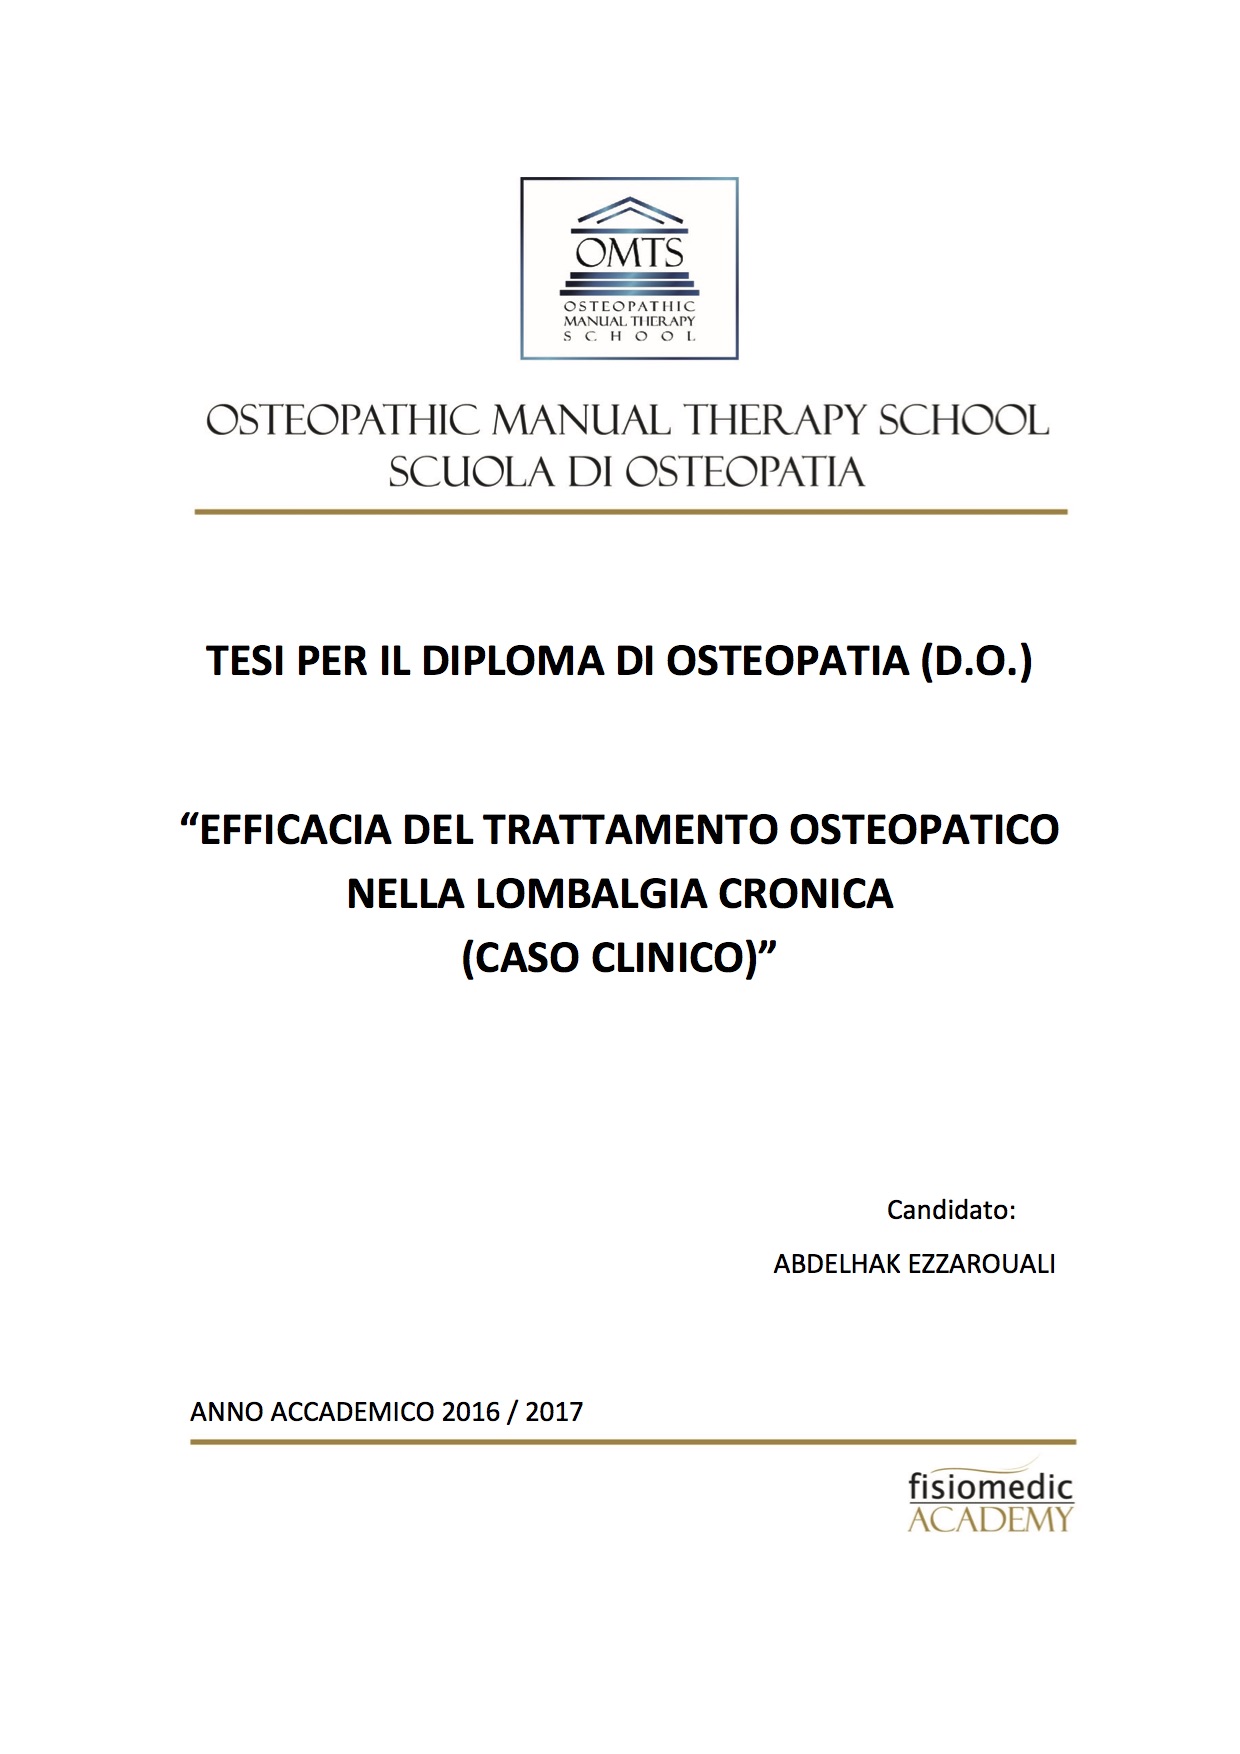 Abdelhak Ezzarouali Tesi Diploma Osteopatia 2017